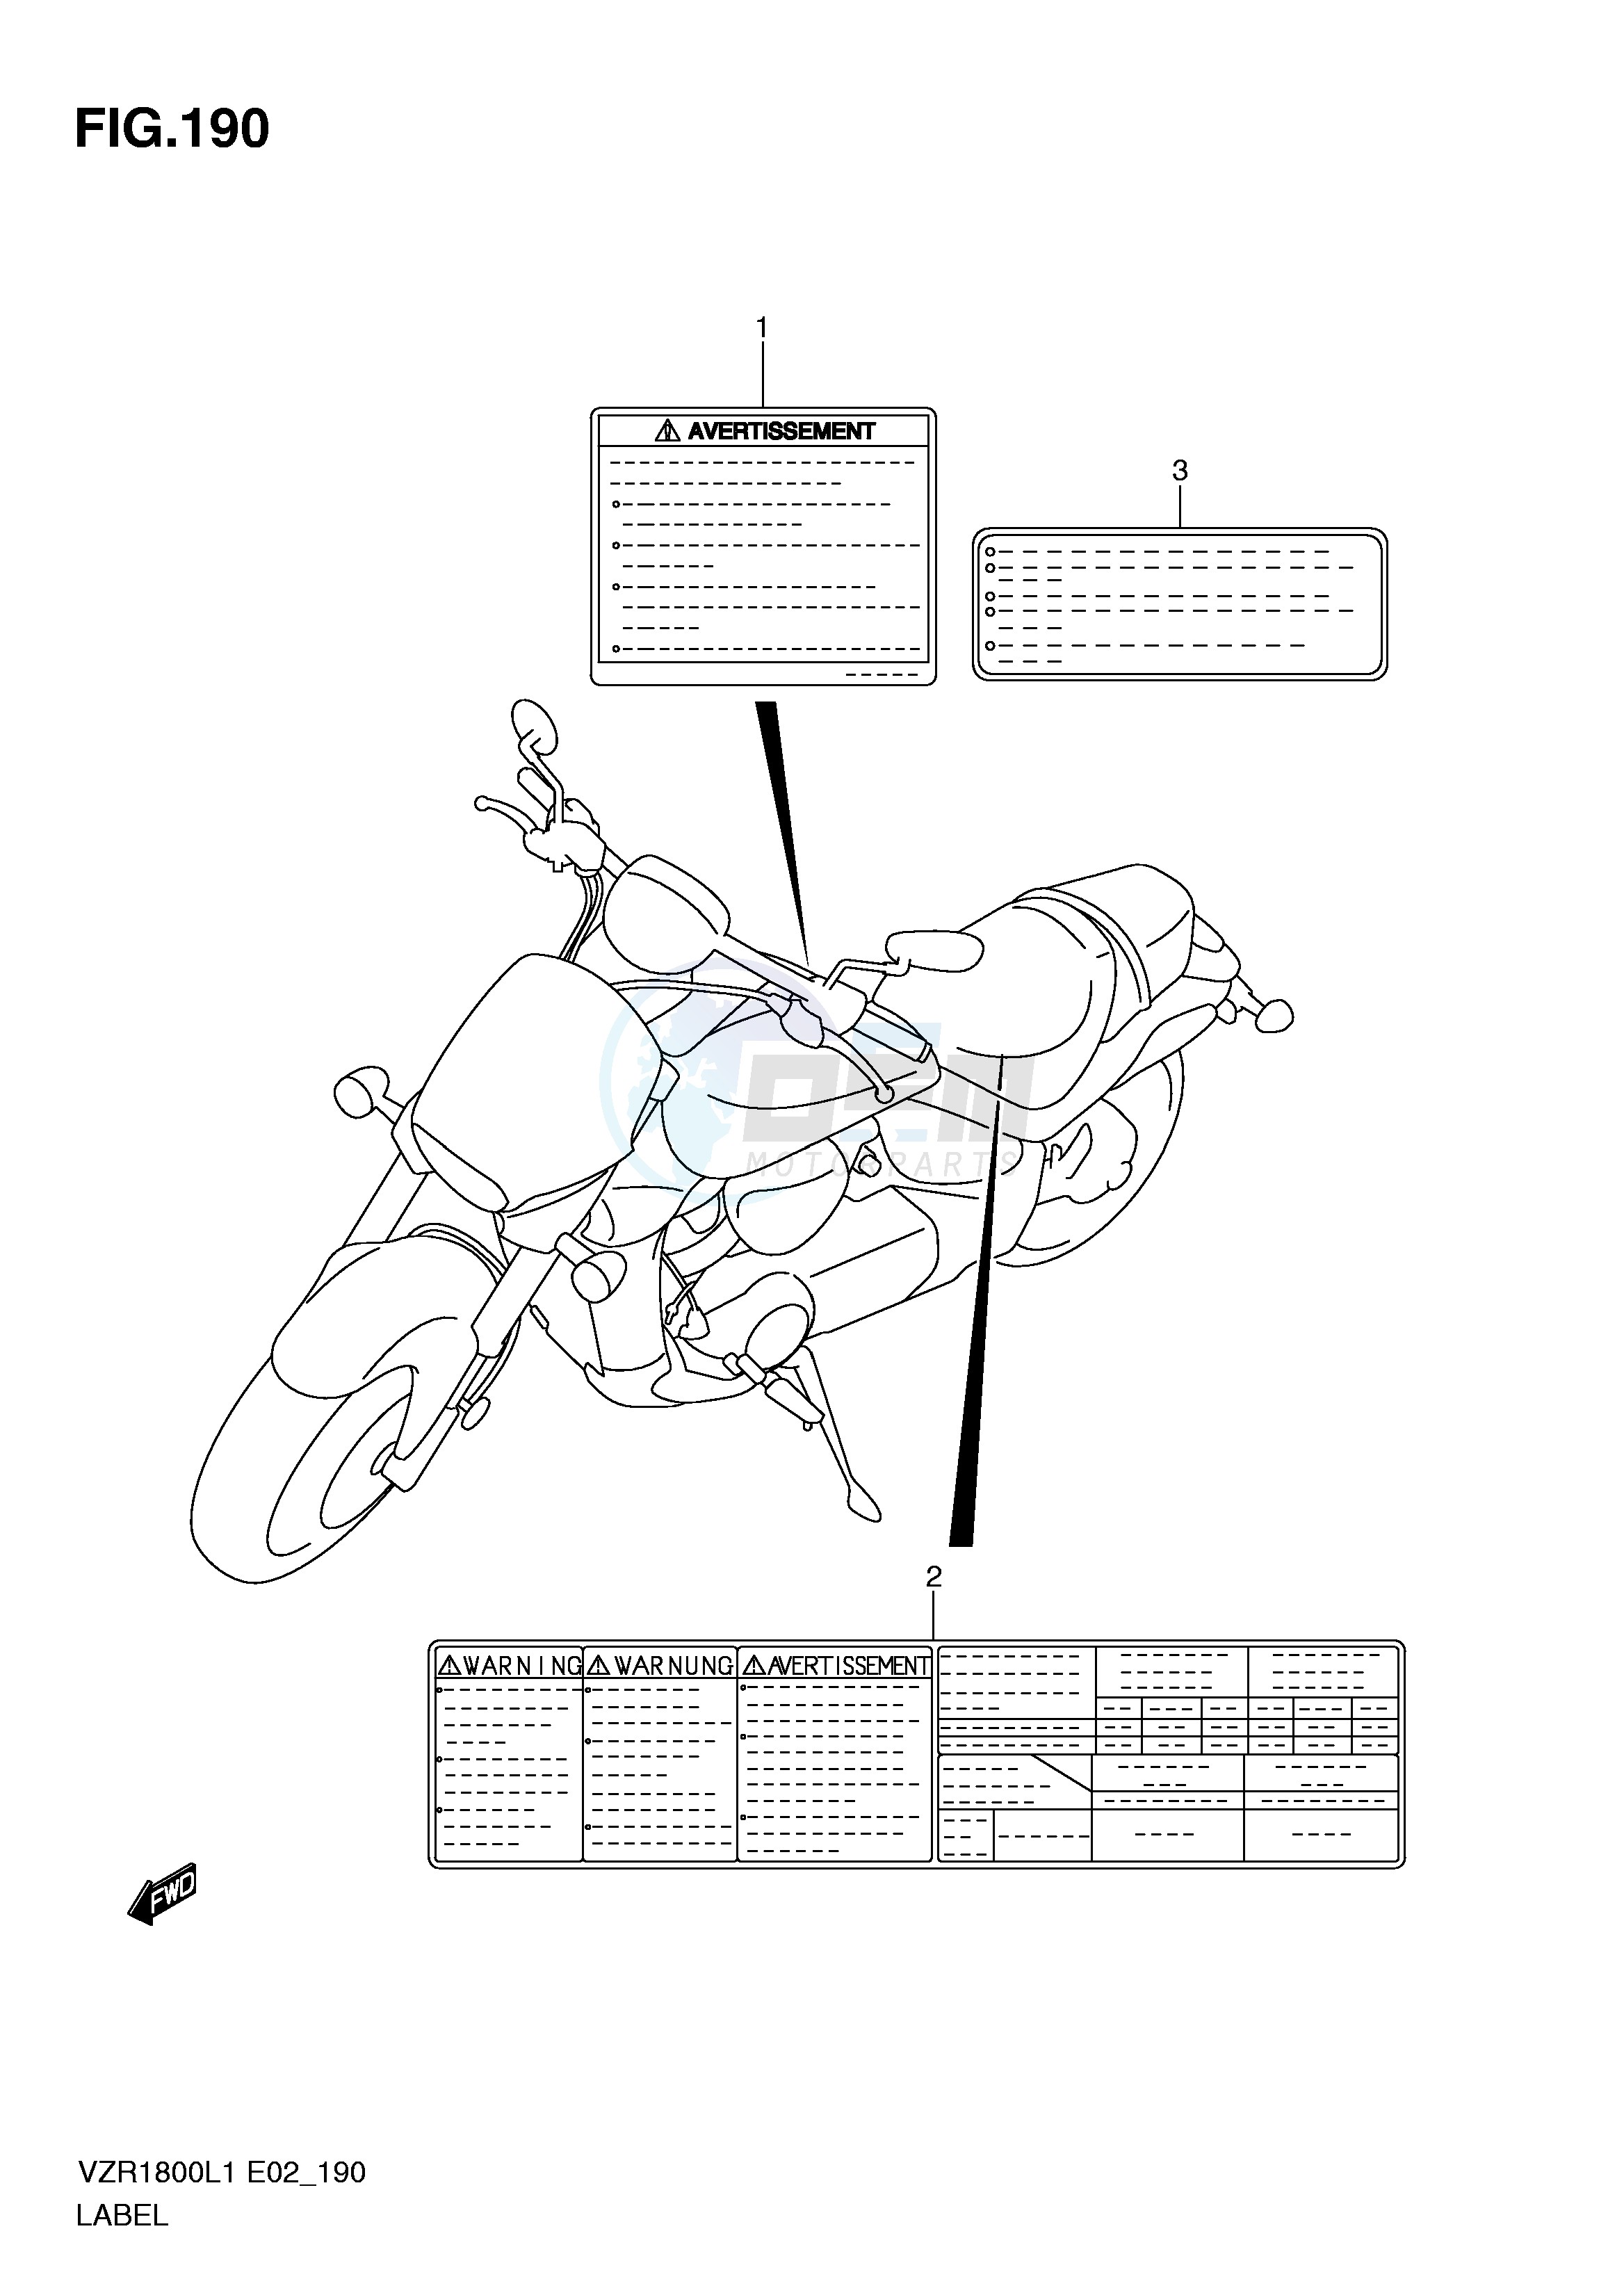 LABEL (VZR1800UFL1 E19) blueprint